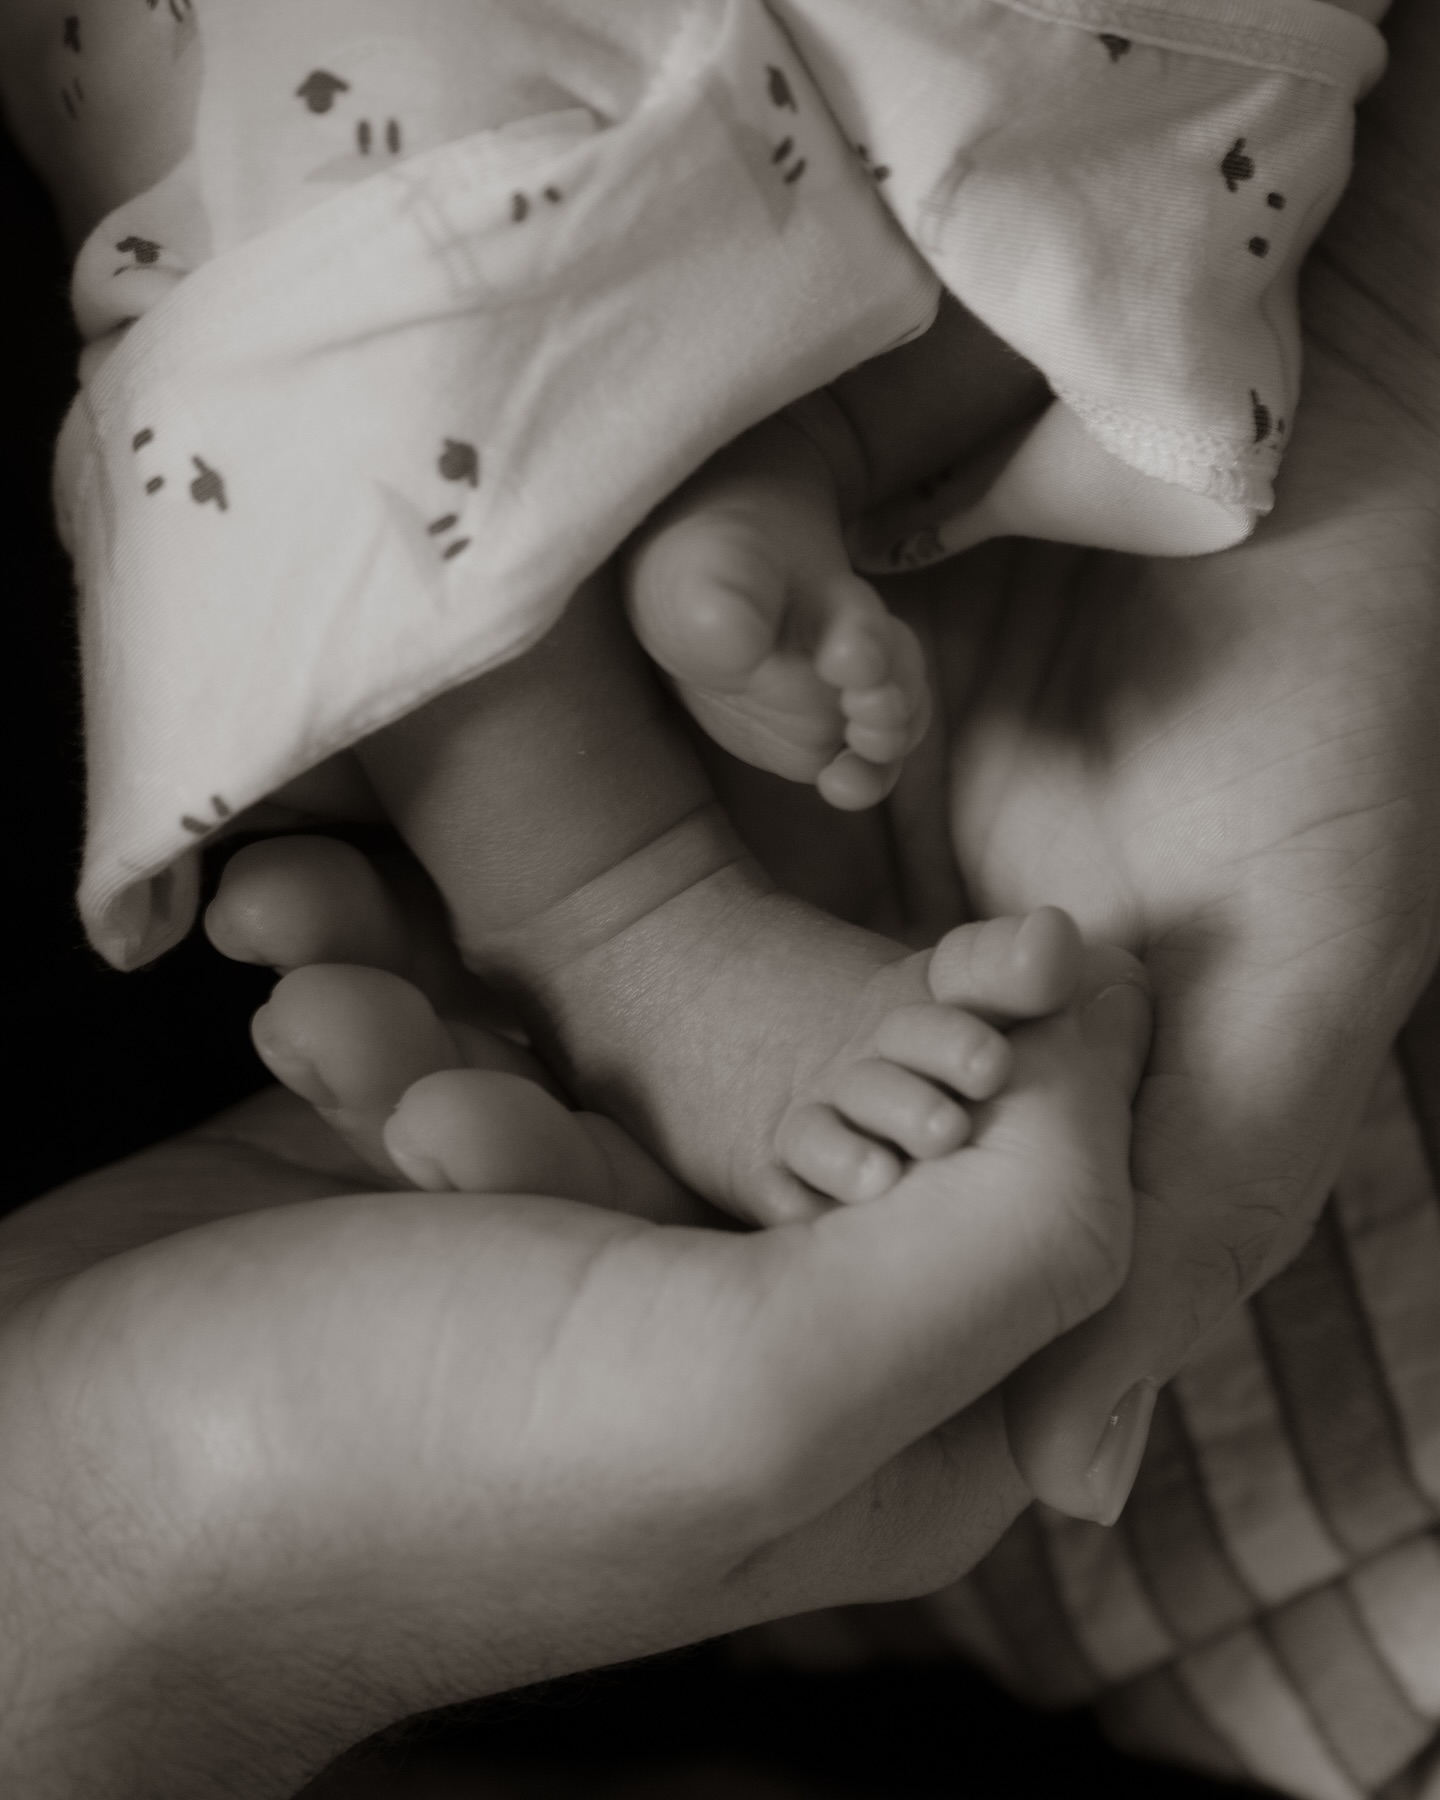 Sofia Richie and Elliot Grainge Welcome Their First Child, Eloise Samantha Grainge!